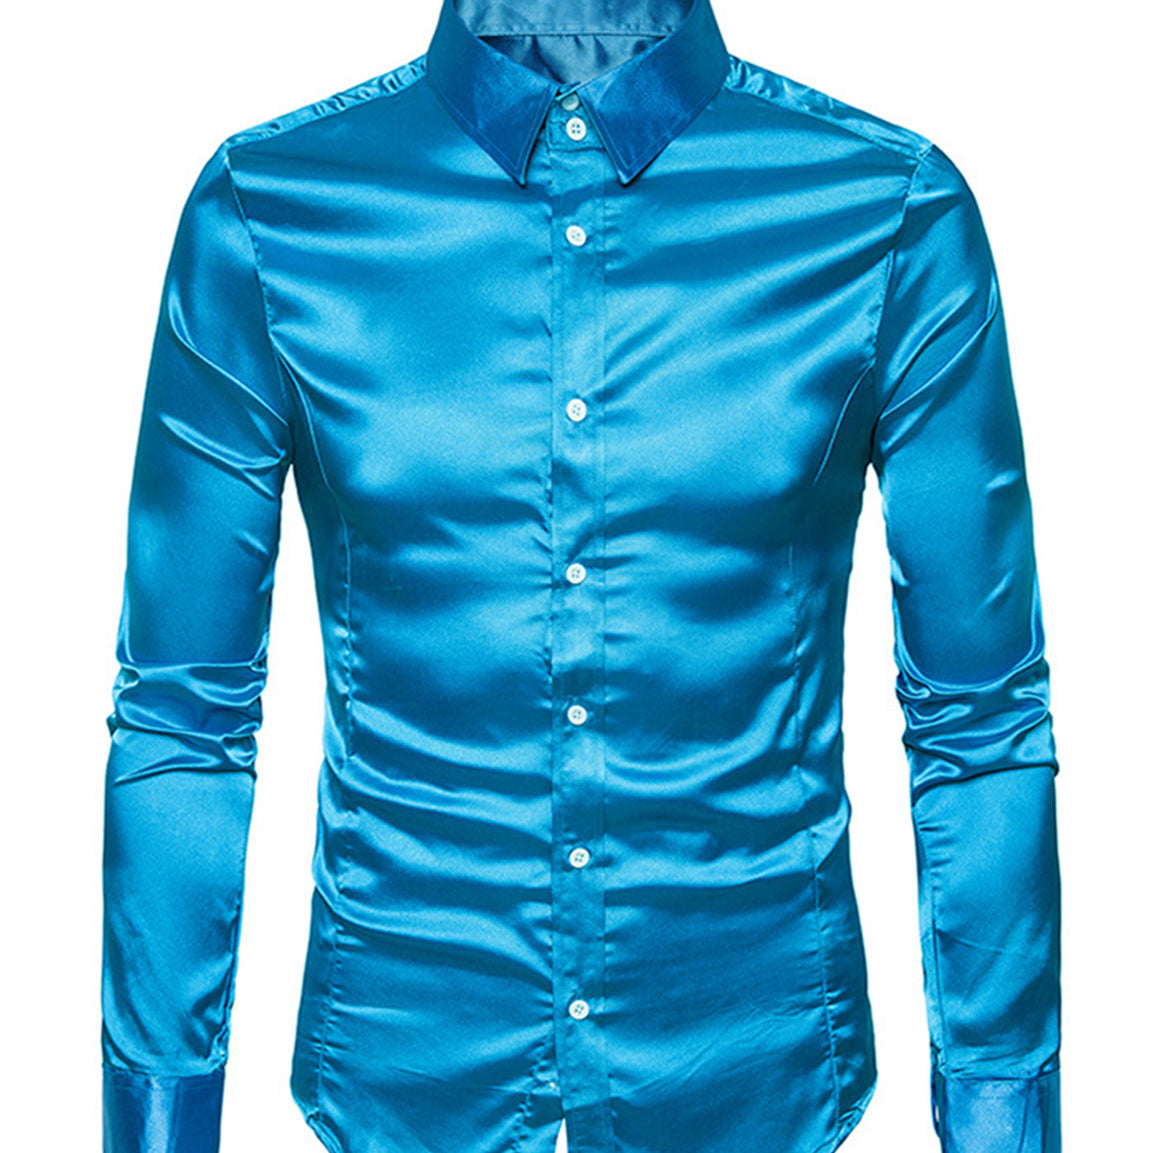 Men's Satin Smooth Button Up Tuxedo Long Sleeve Party Dress Shirt